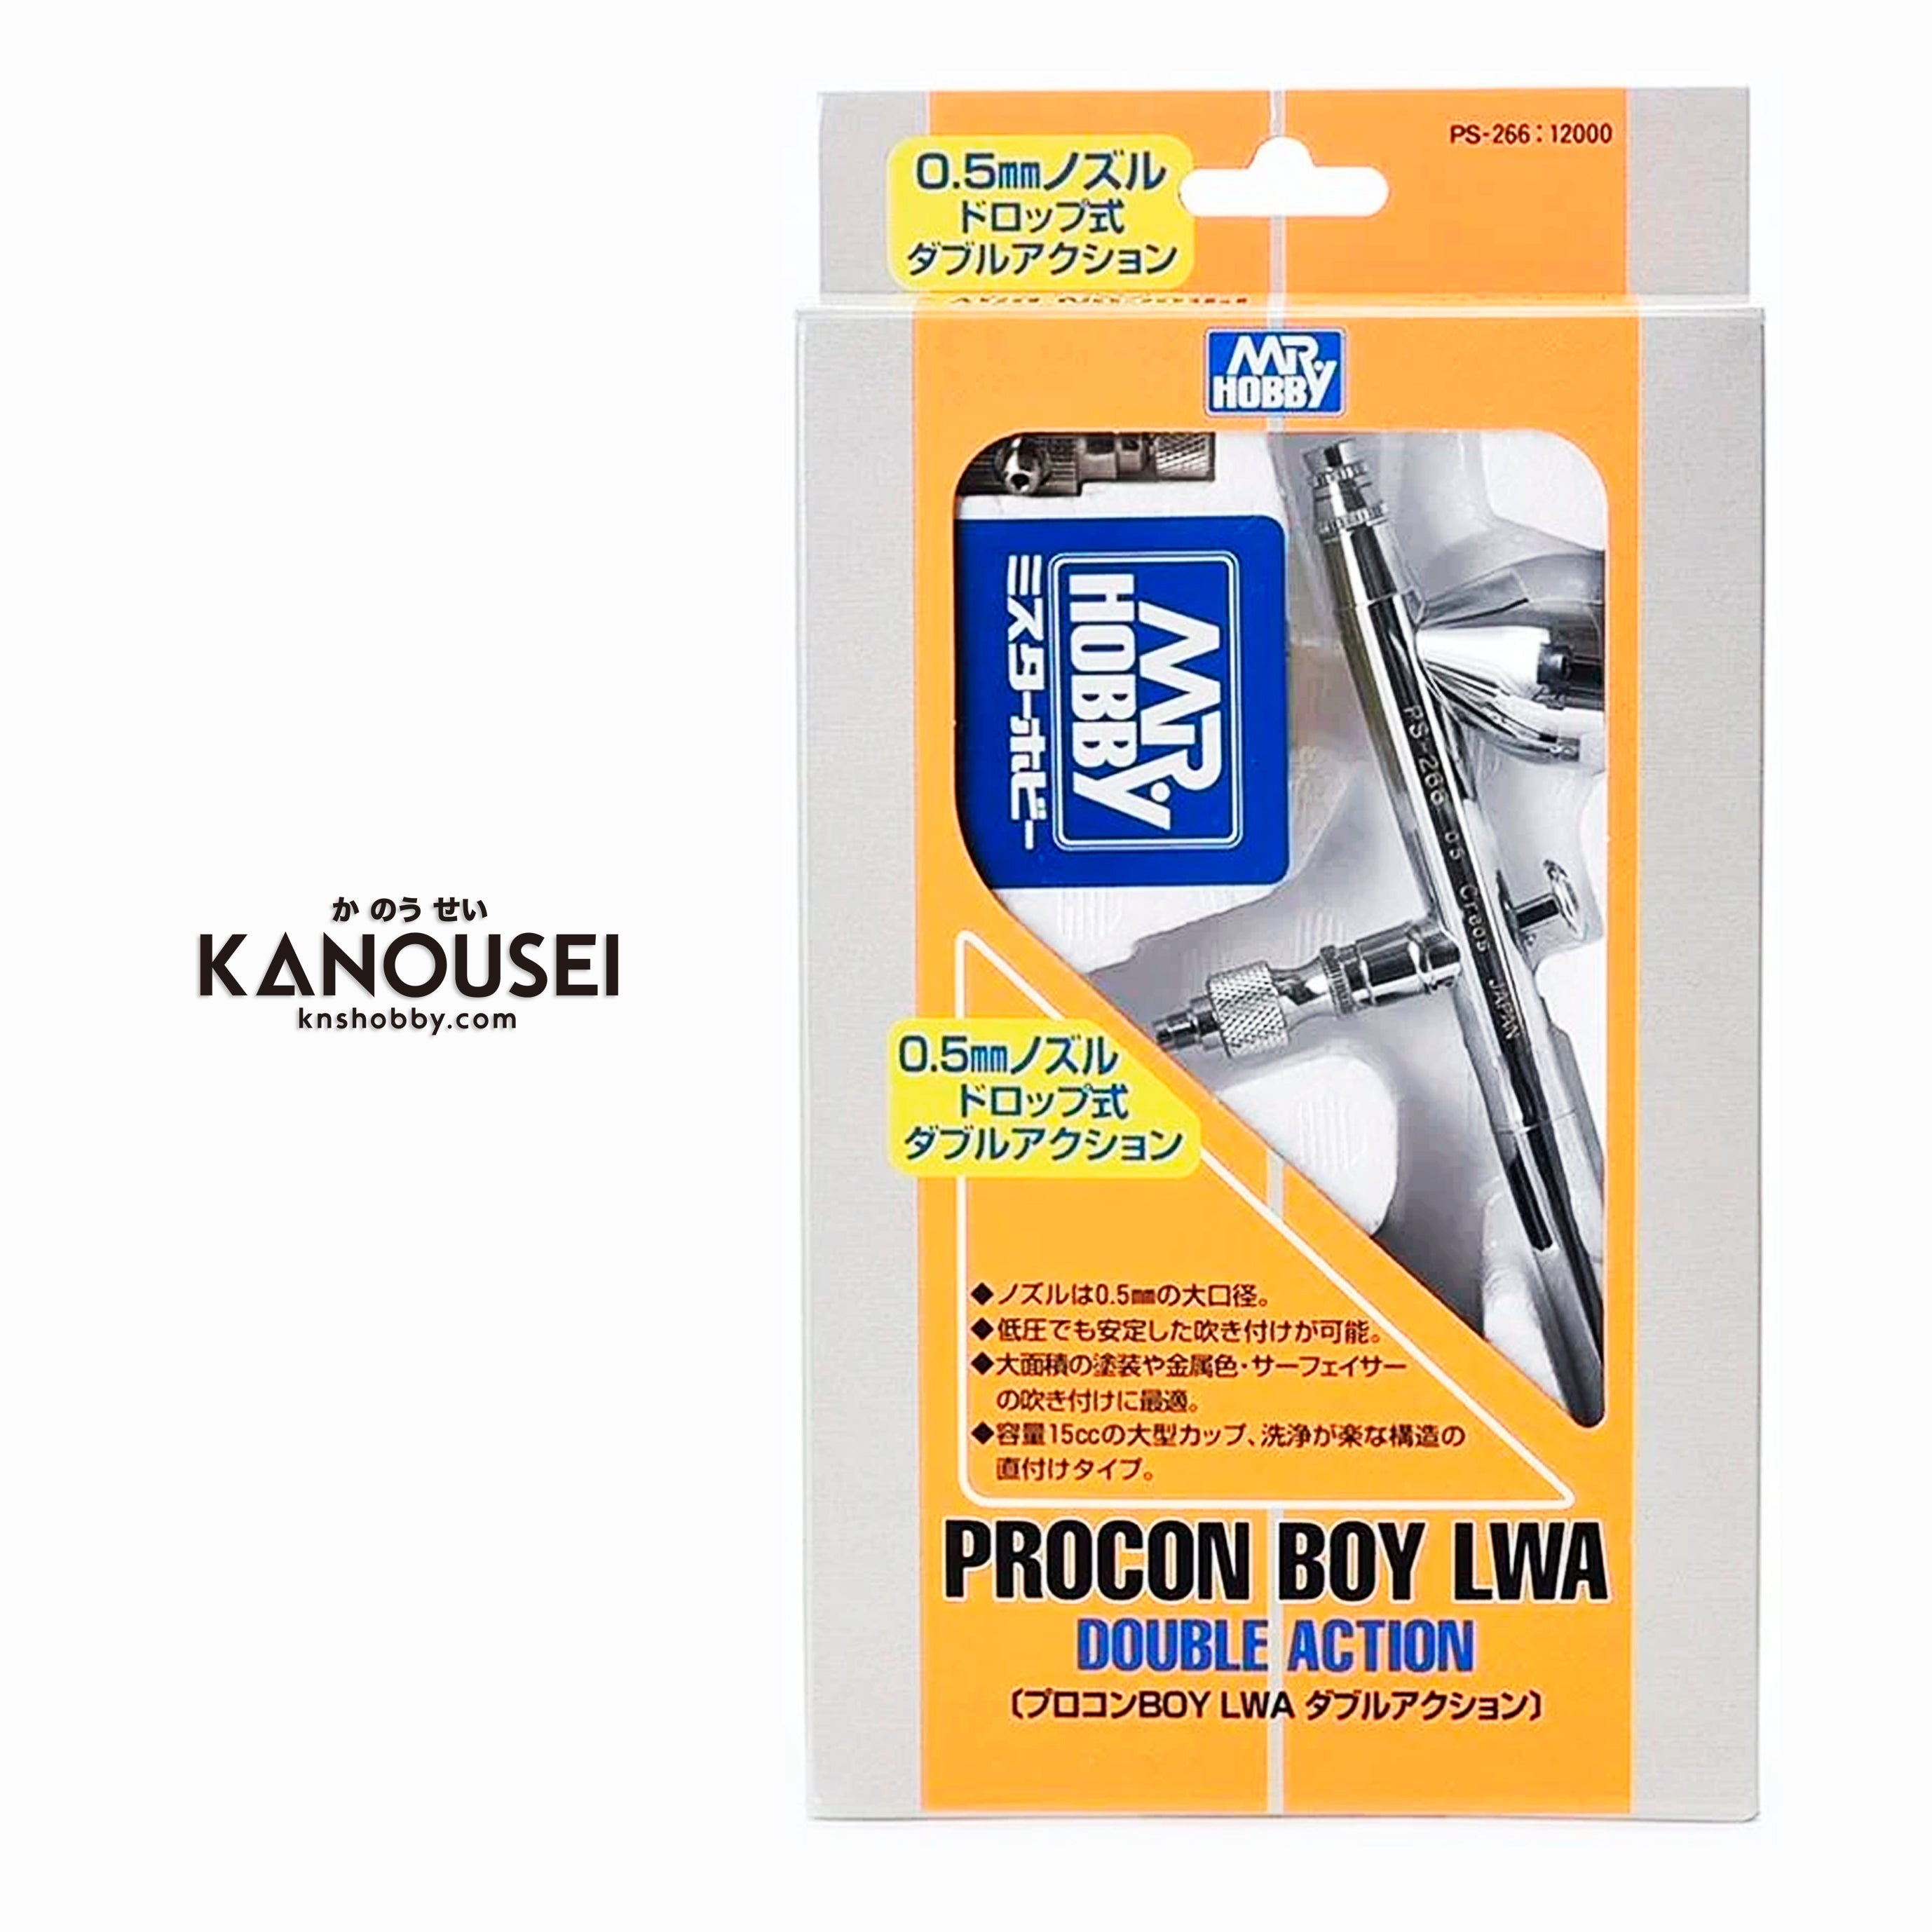 KNS Hobby - PROCON BOY LWA Double Action 0.5 mm PS266 – KANOUSEI HOBBY